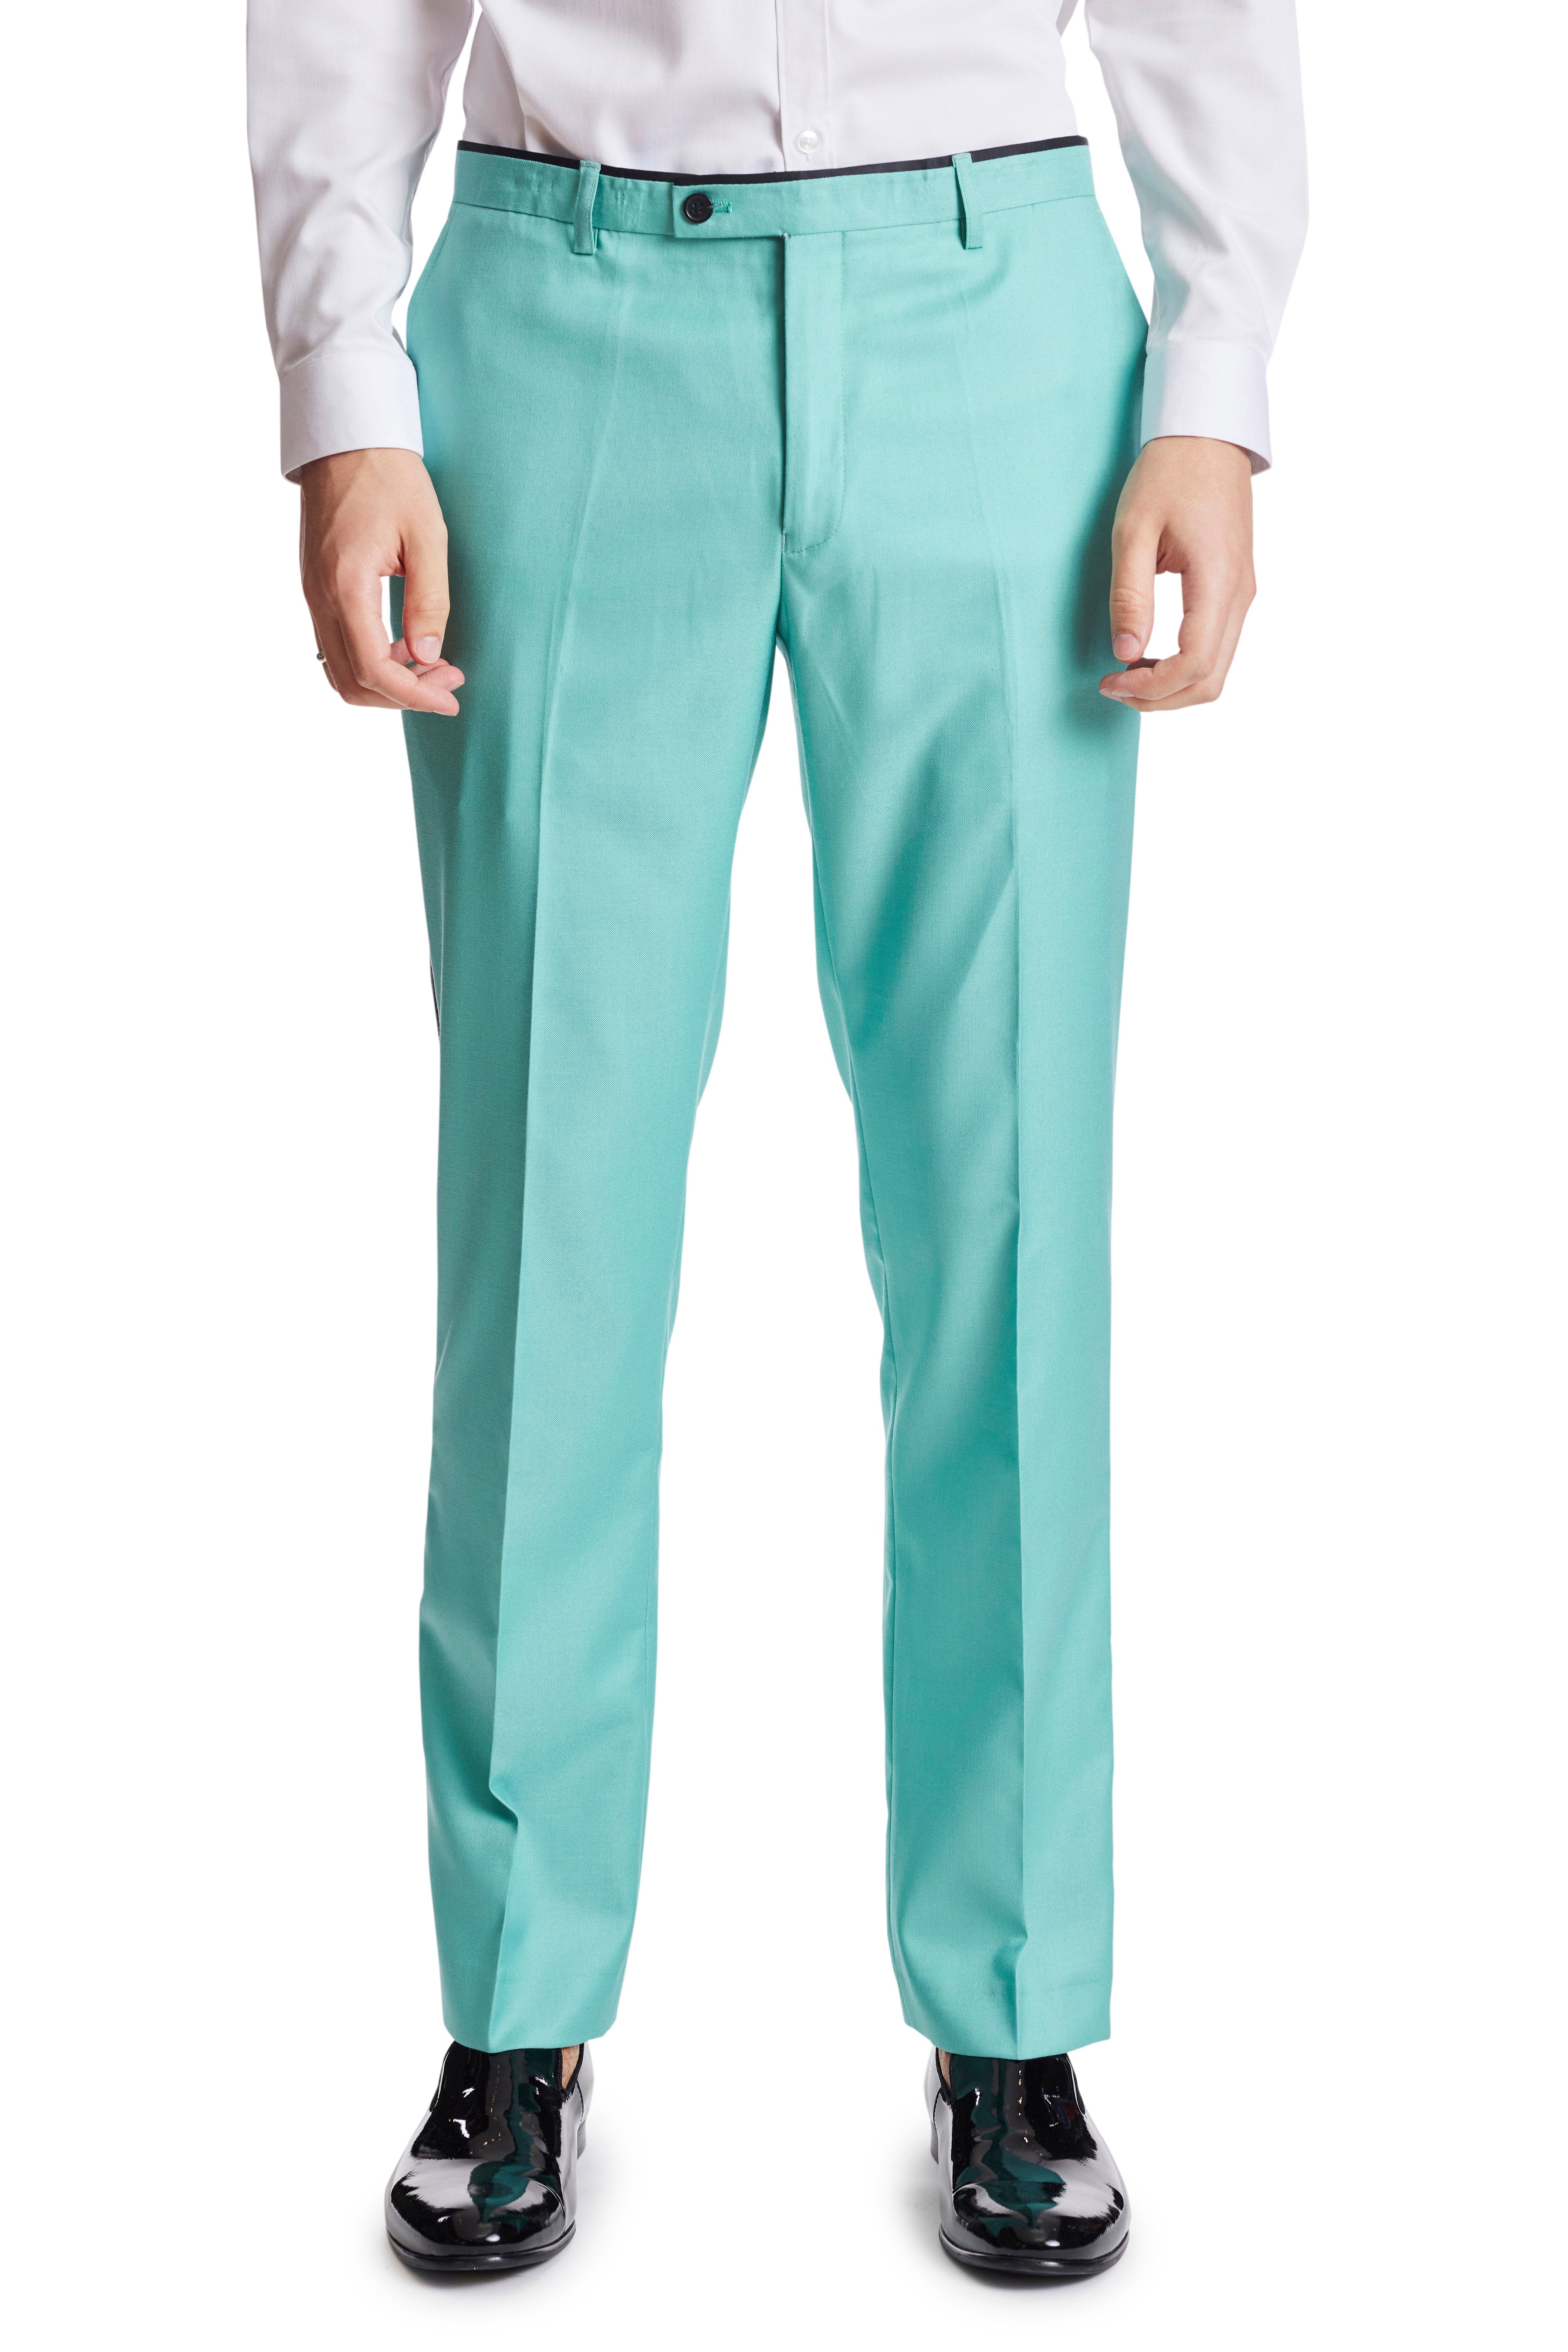 Sloane Tux Pants - slim - Minted Green